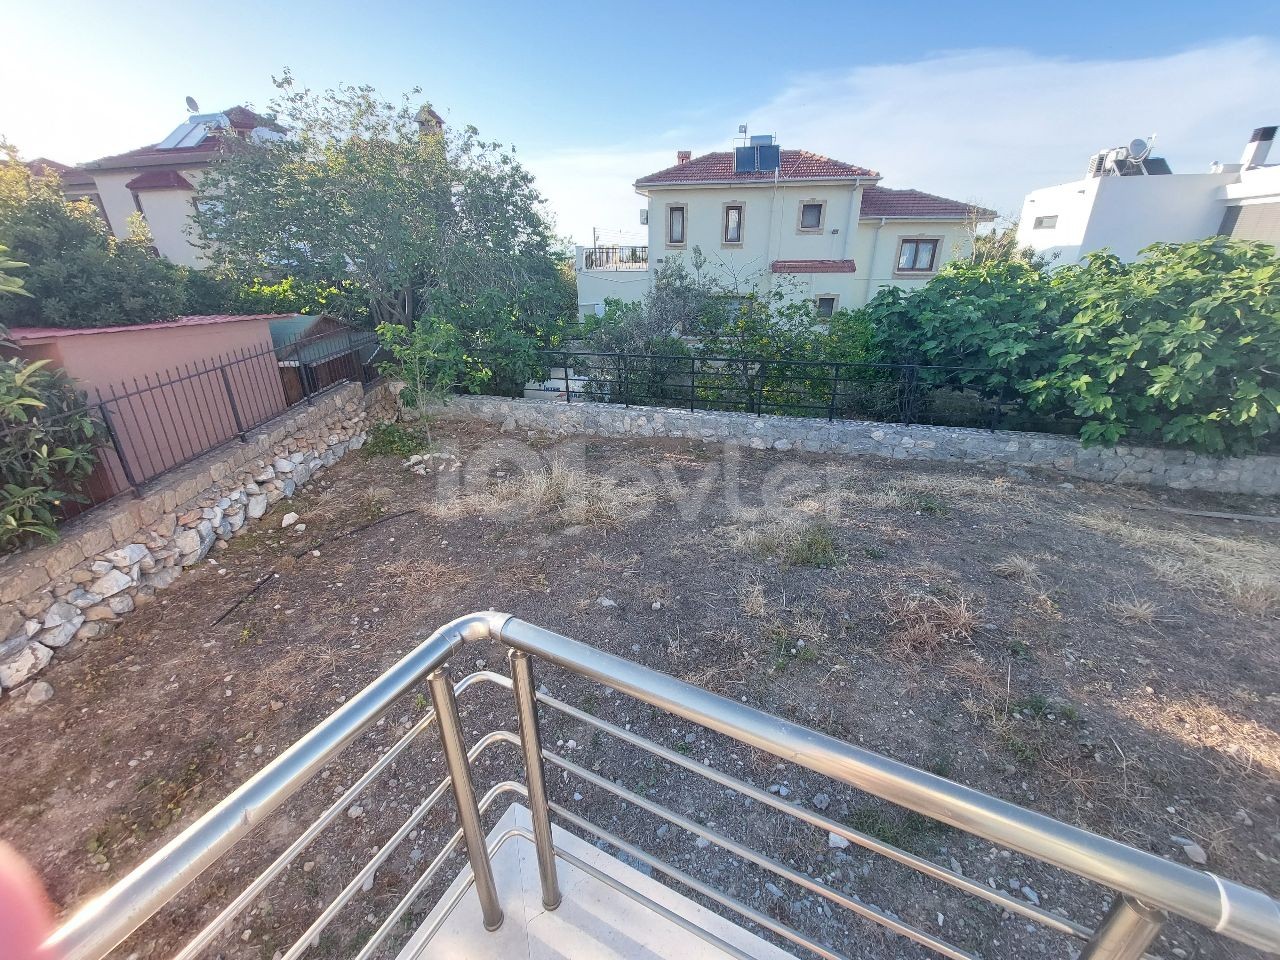 Bellapayis, 4+1 villa for sale, walking distance to Necat British school +905428777144 Русский, Turkish, English 